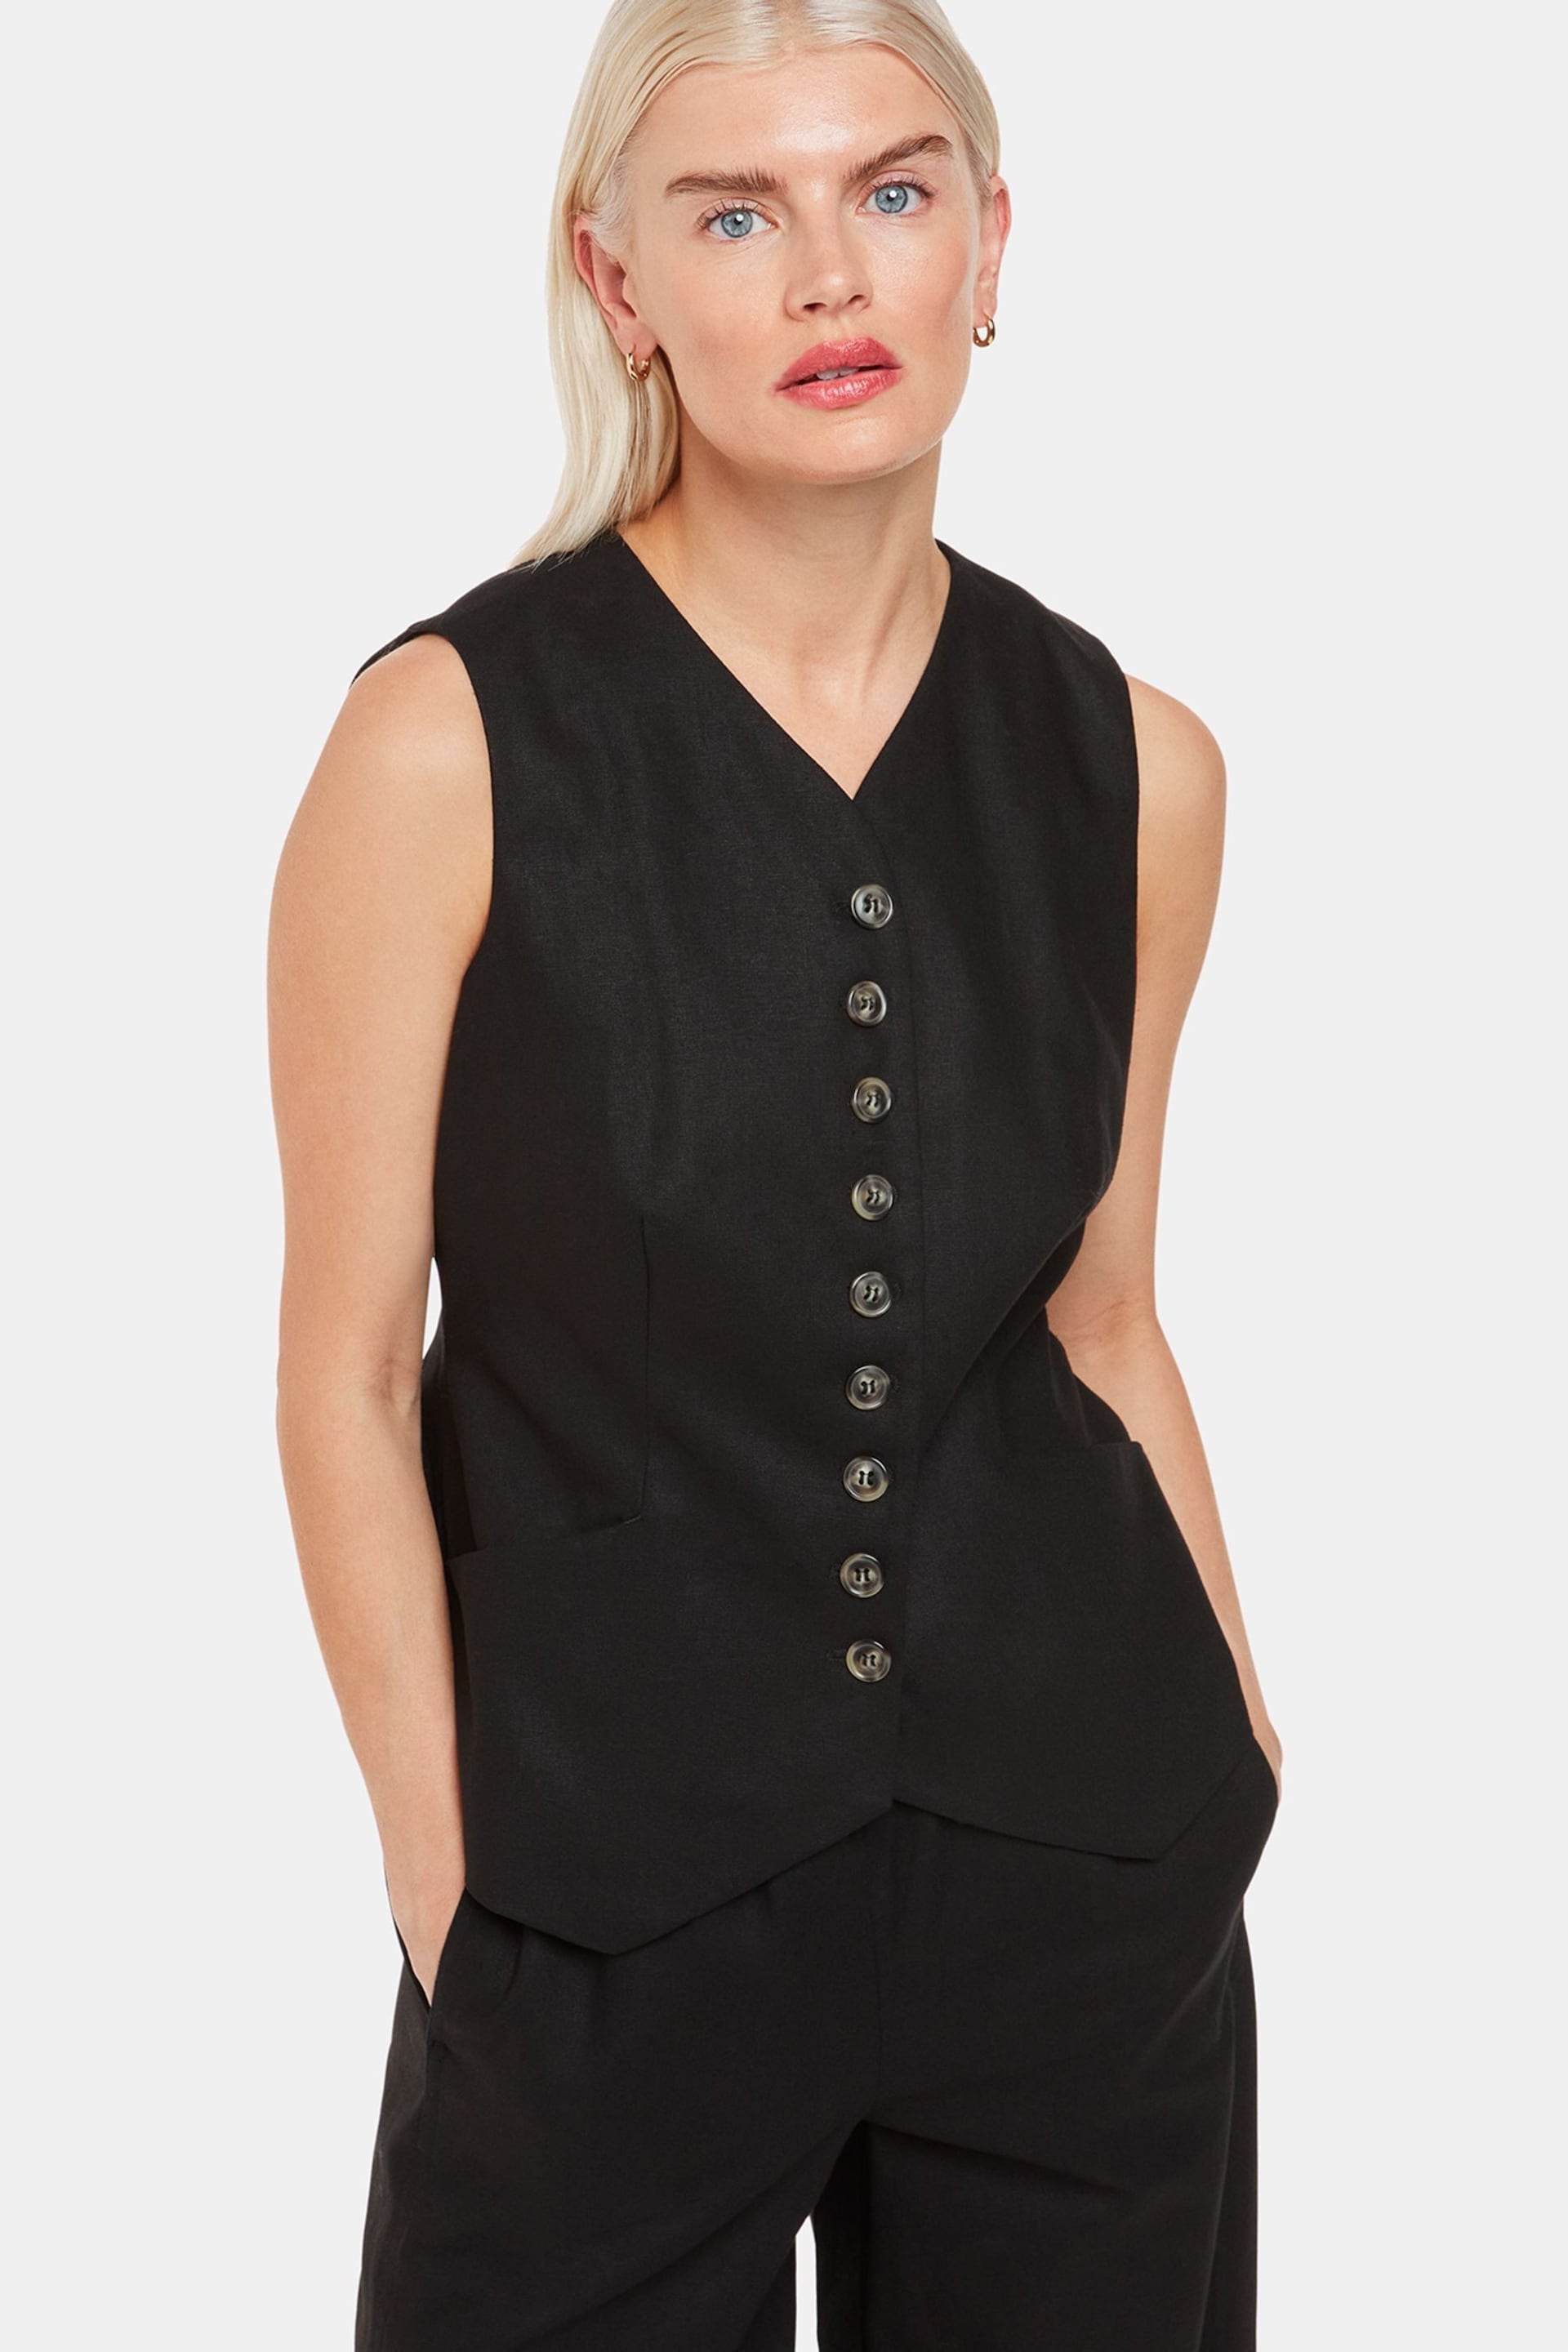 Whistles Lindsey Linen Blend Black Type Waistcoats - Image 1 of 5